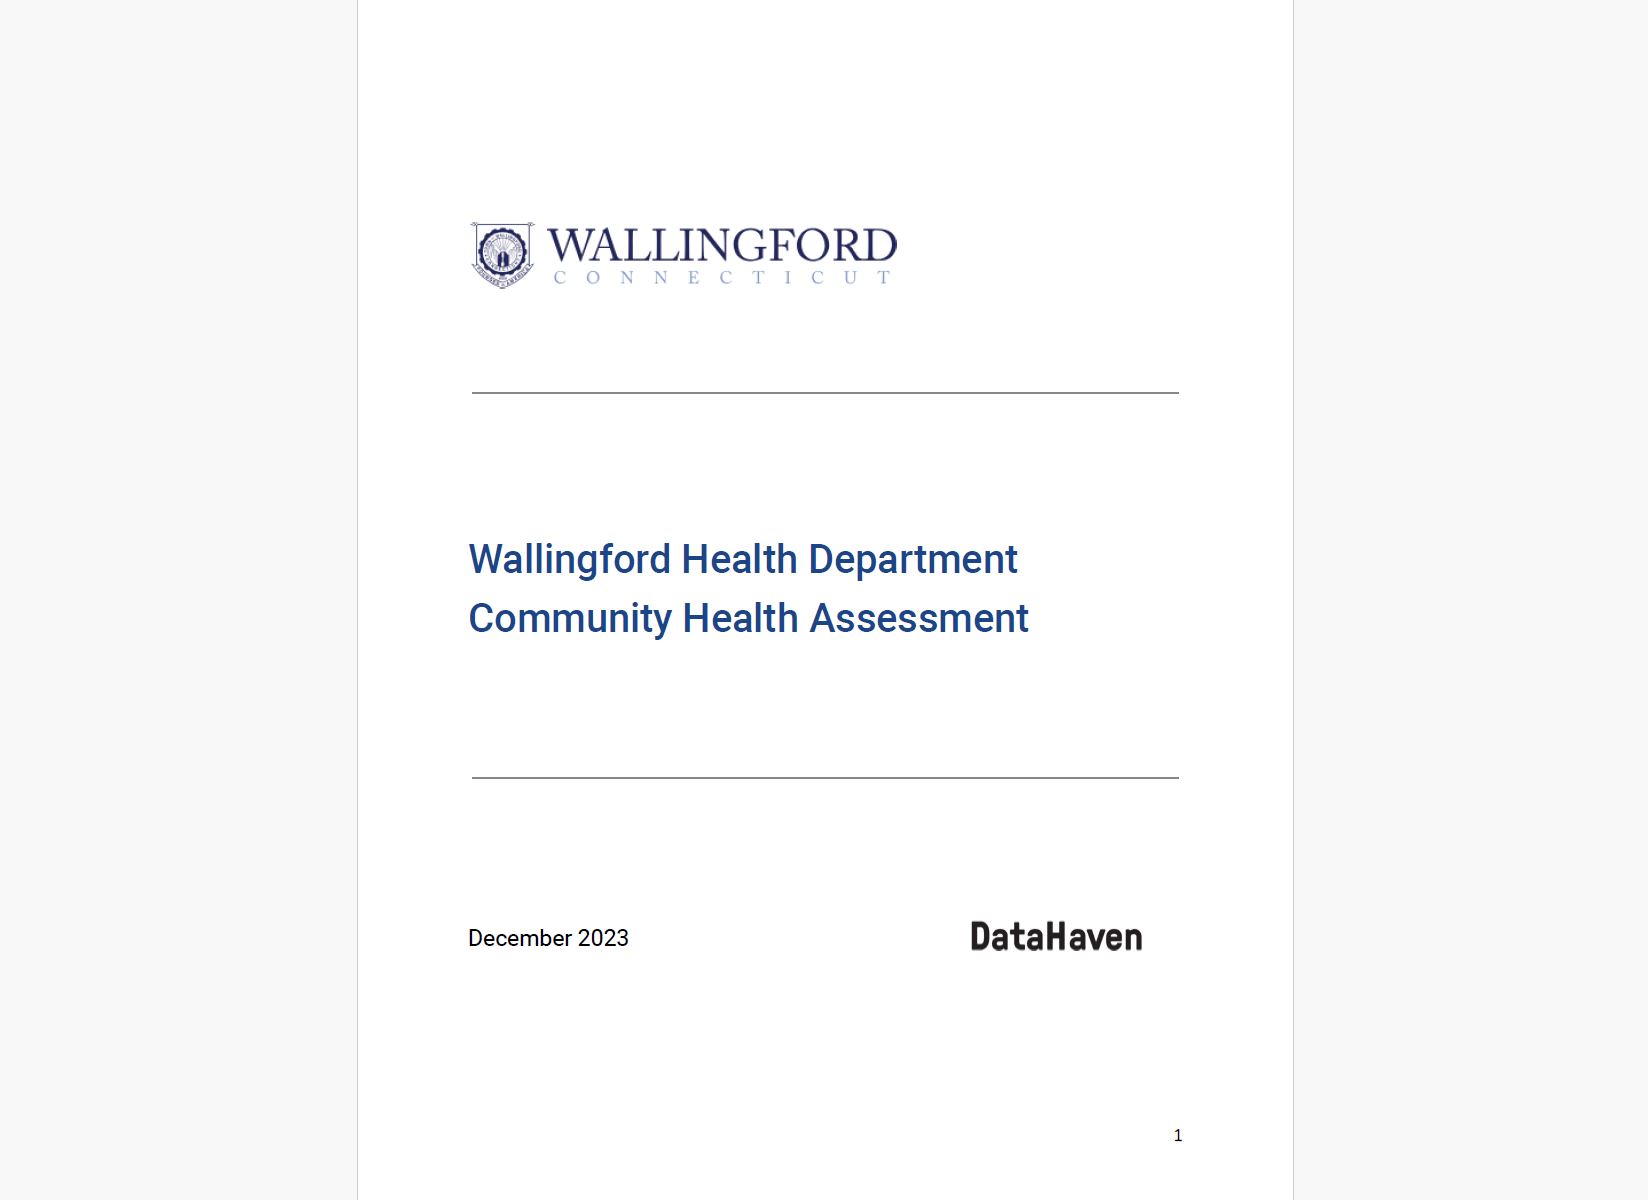 Wallingford Health Department community assessment Connecticut DataHaven cover banner